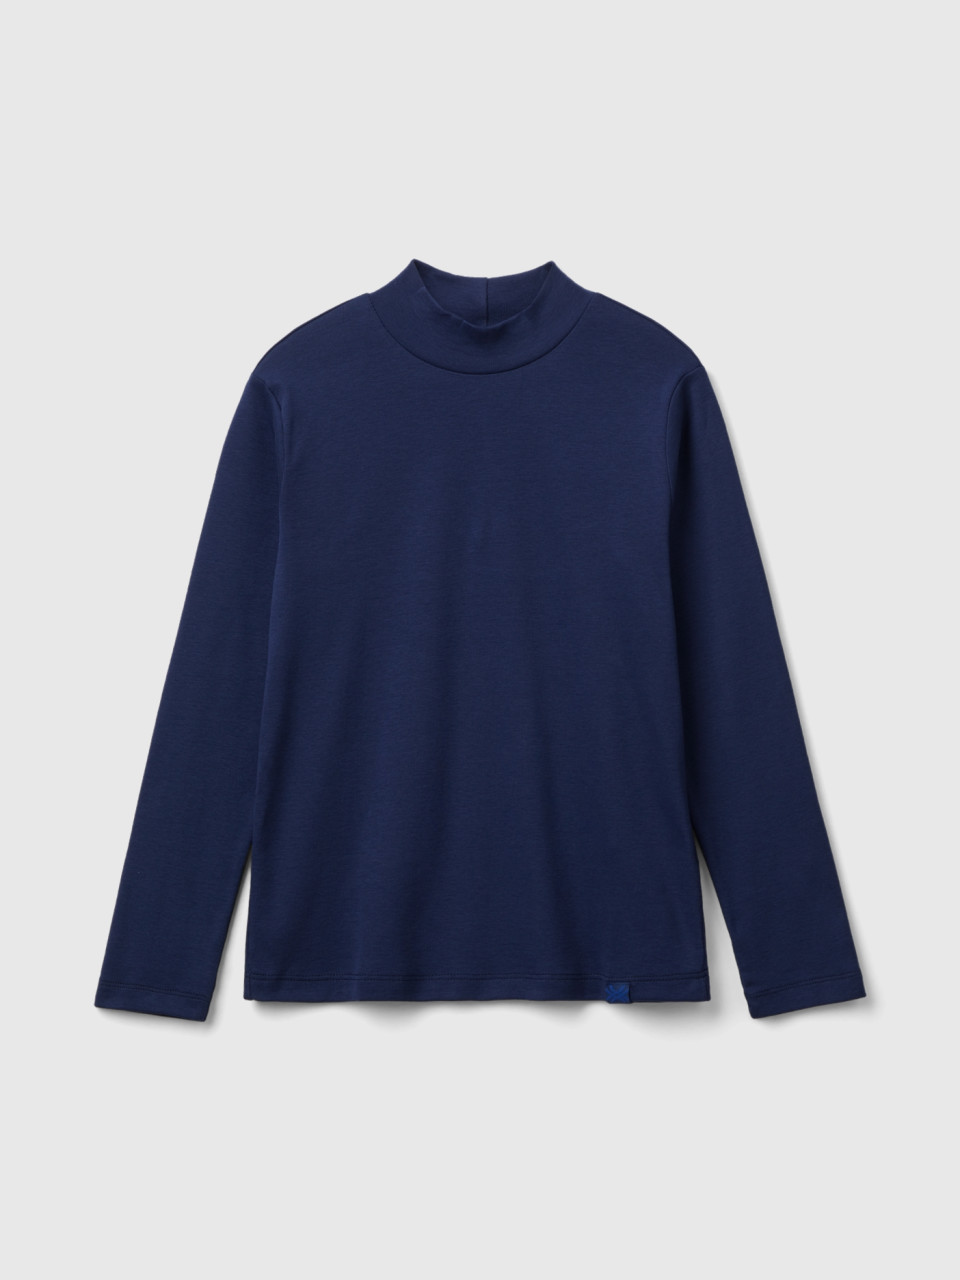 Benetton, Rubbed Knit Turtleneck T-shirt, Dark Blue, Kids